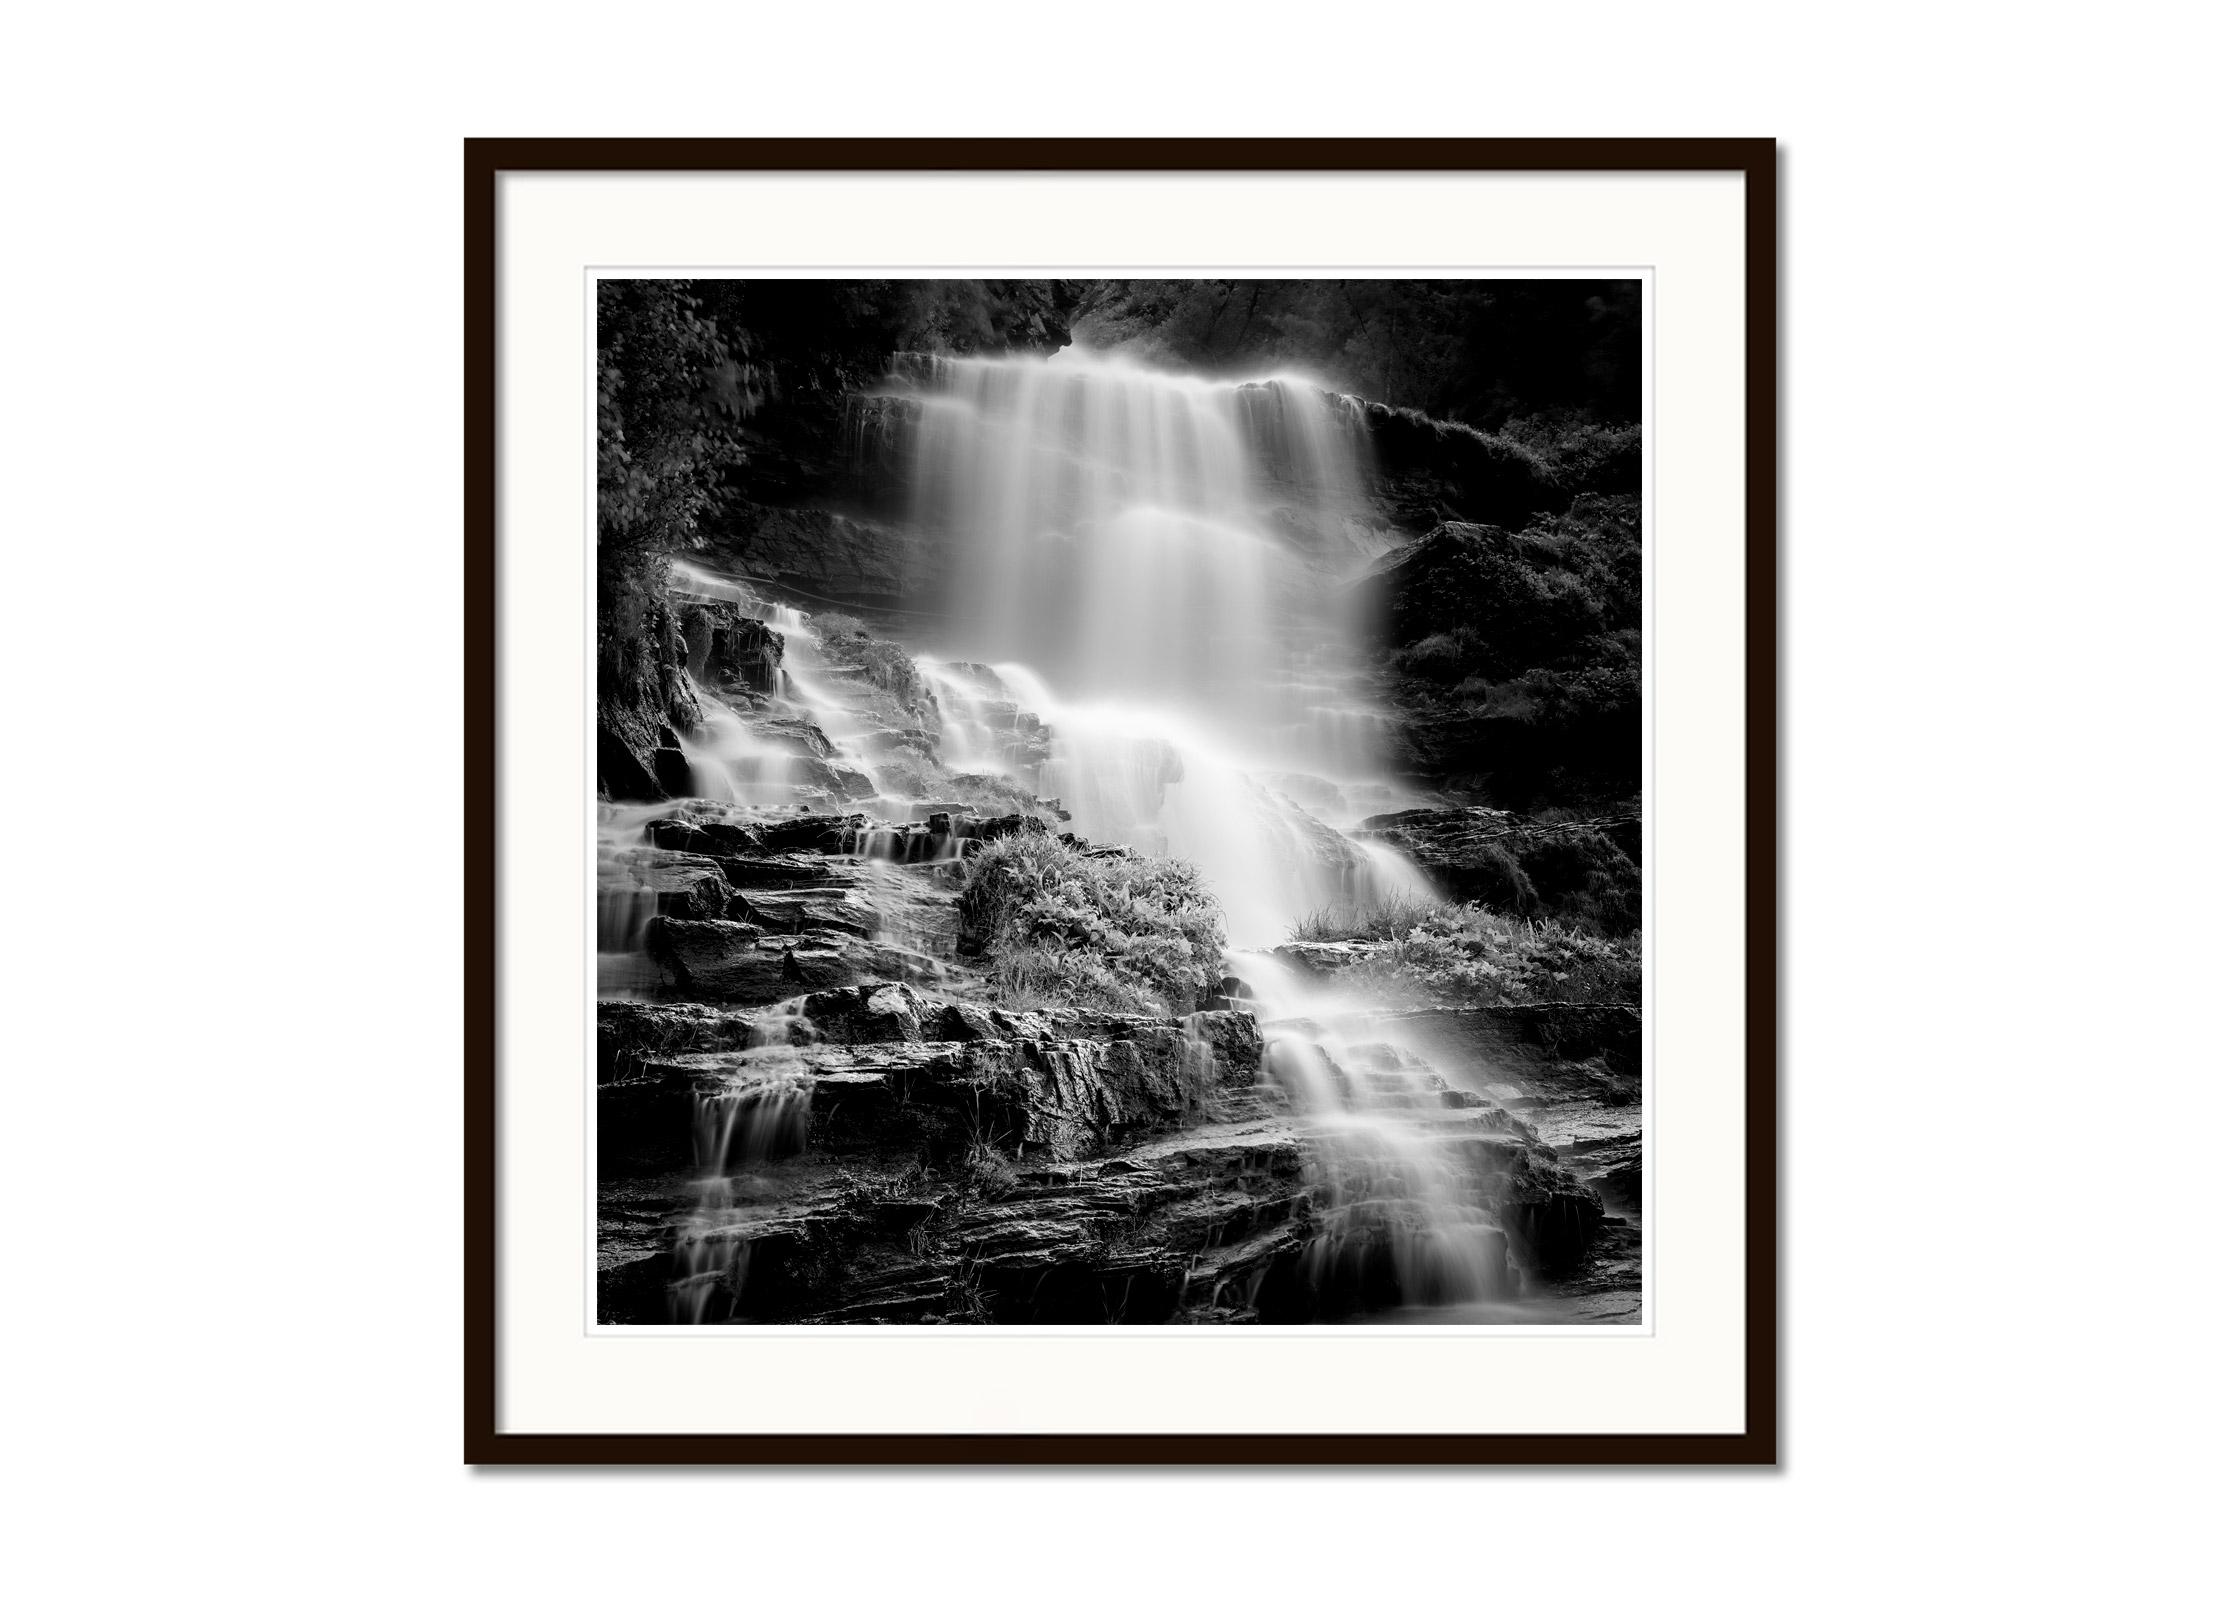 Klockelefall Waterfall, black and white art photography, waterscape, landscape  - Black Landscape Photograph by Gerald Berghammer